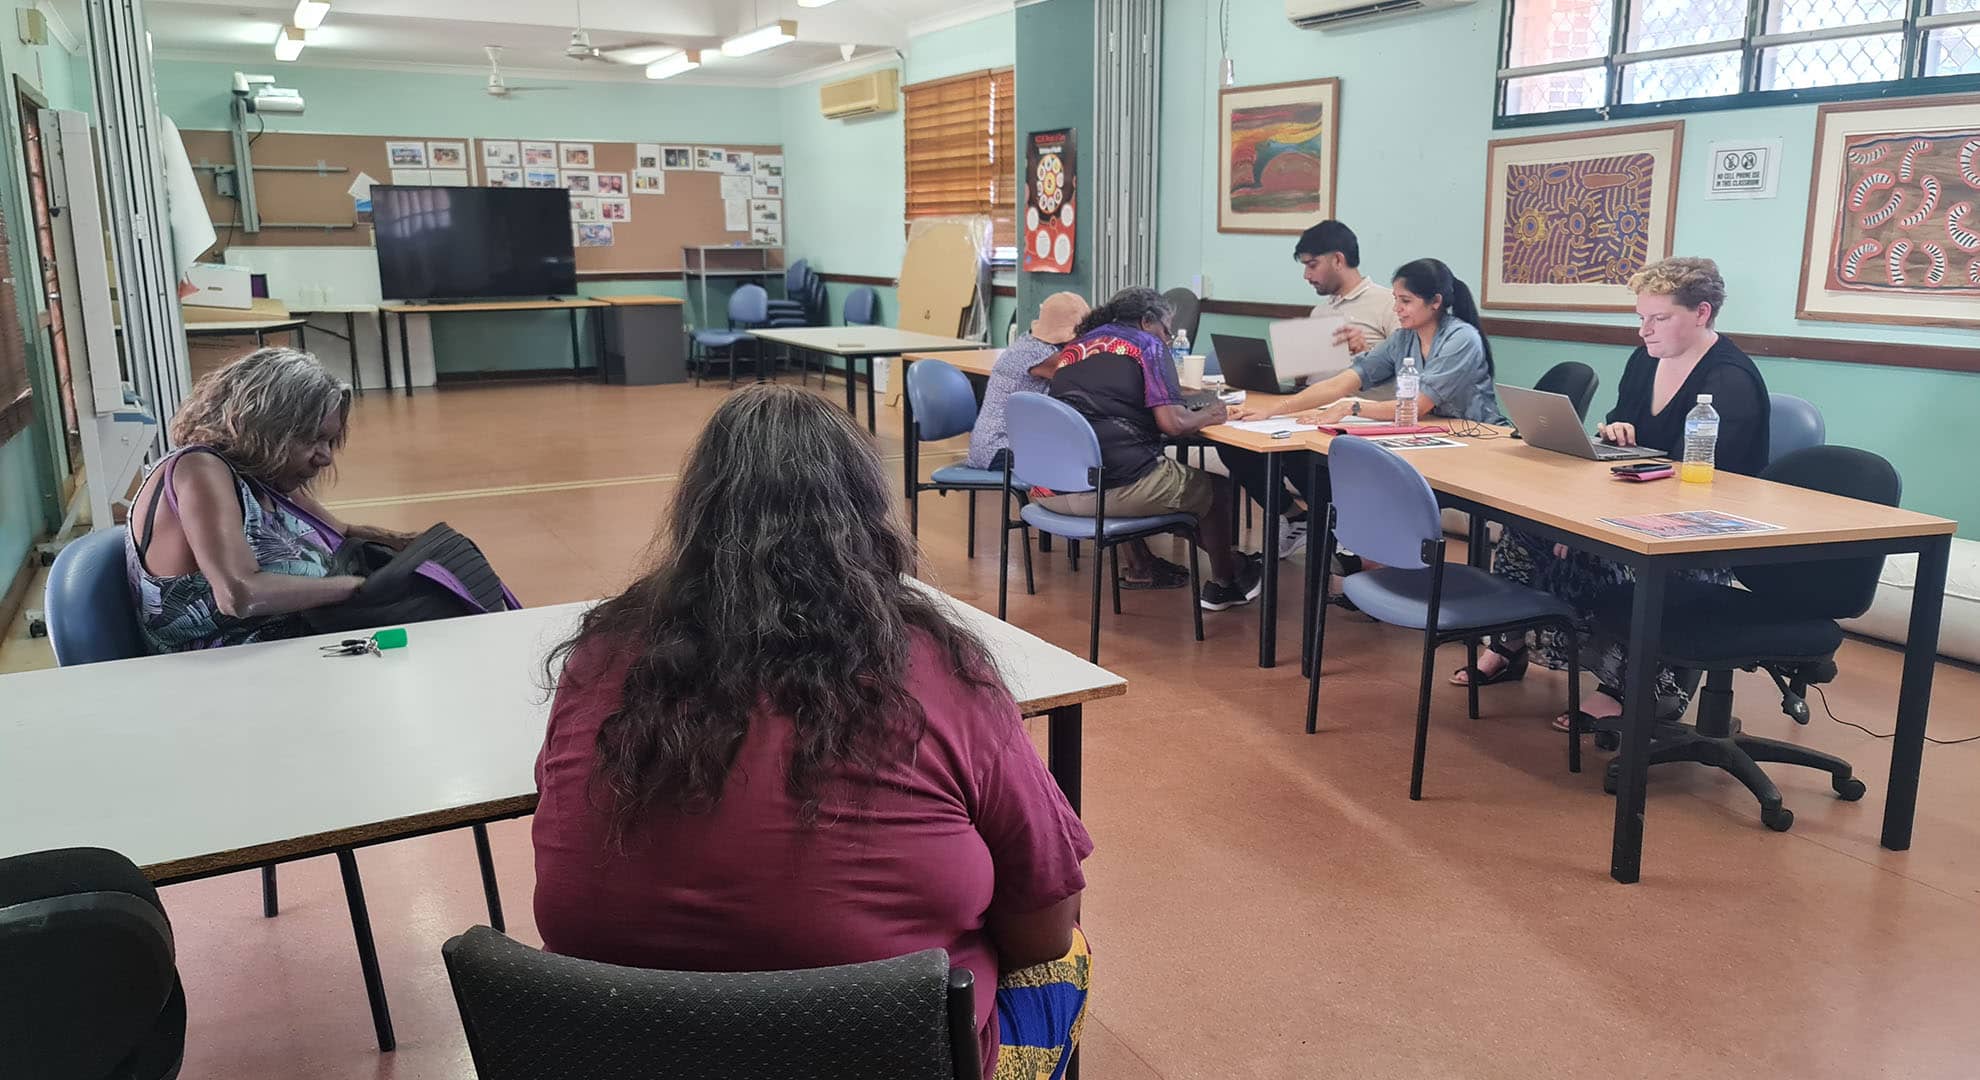 The ECU Tax Clinic with Marra Worra Worra Aboriginal Corporation filing tax returns in a community hall.